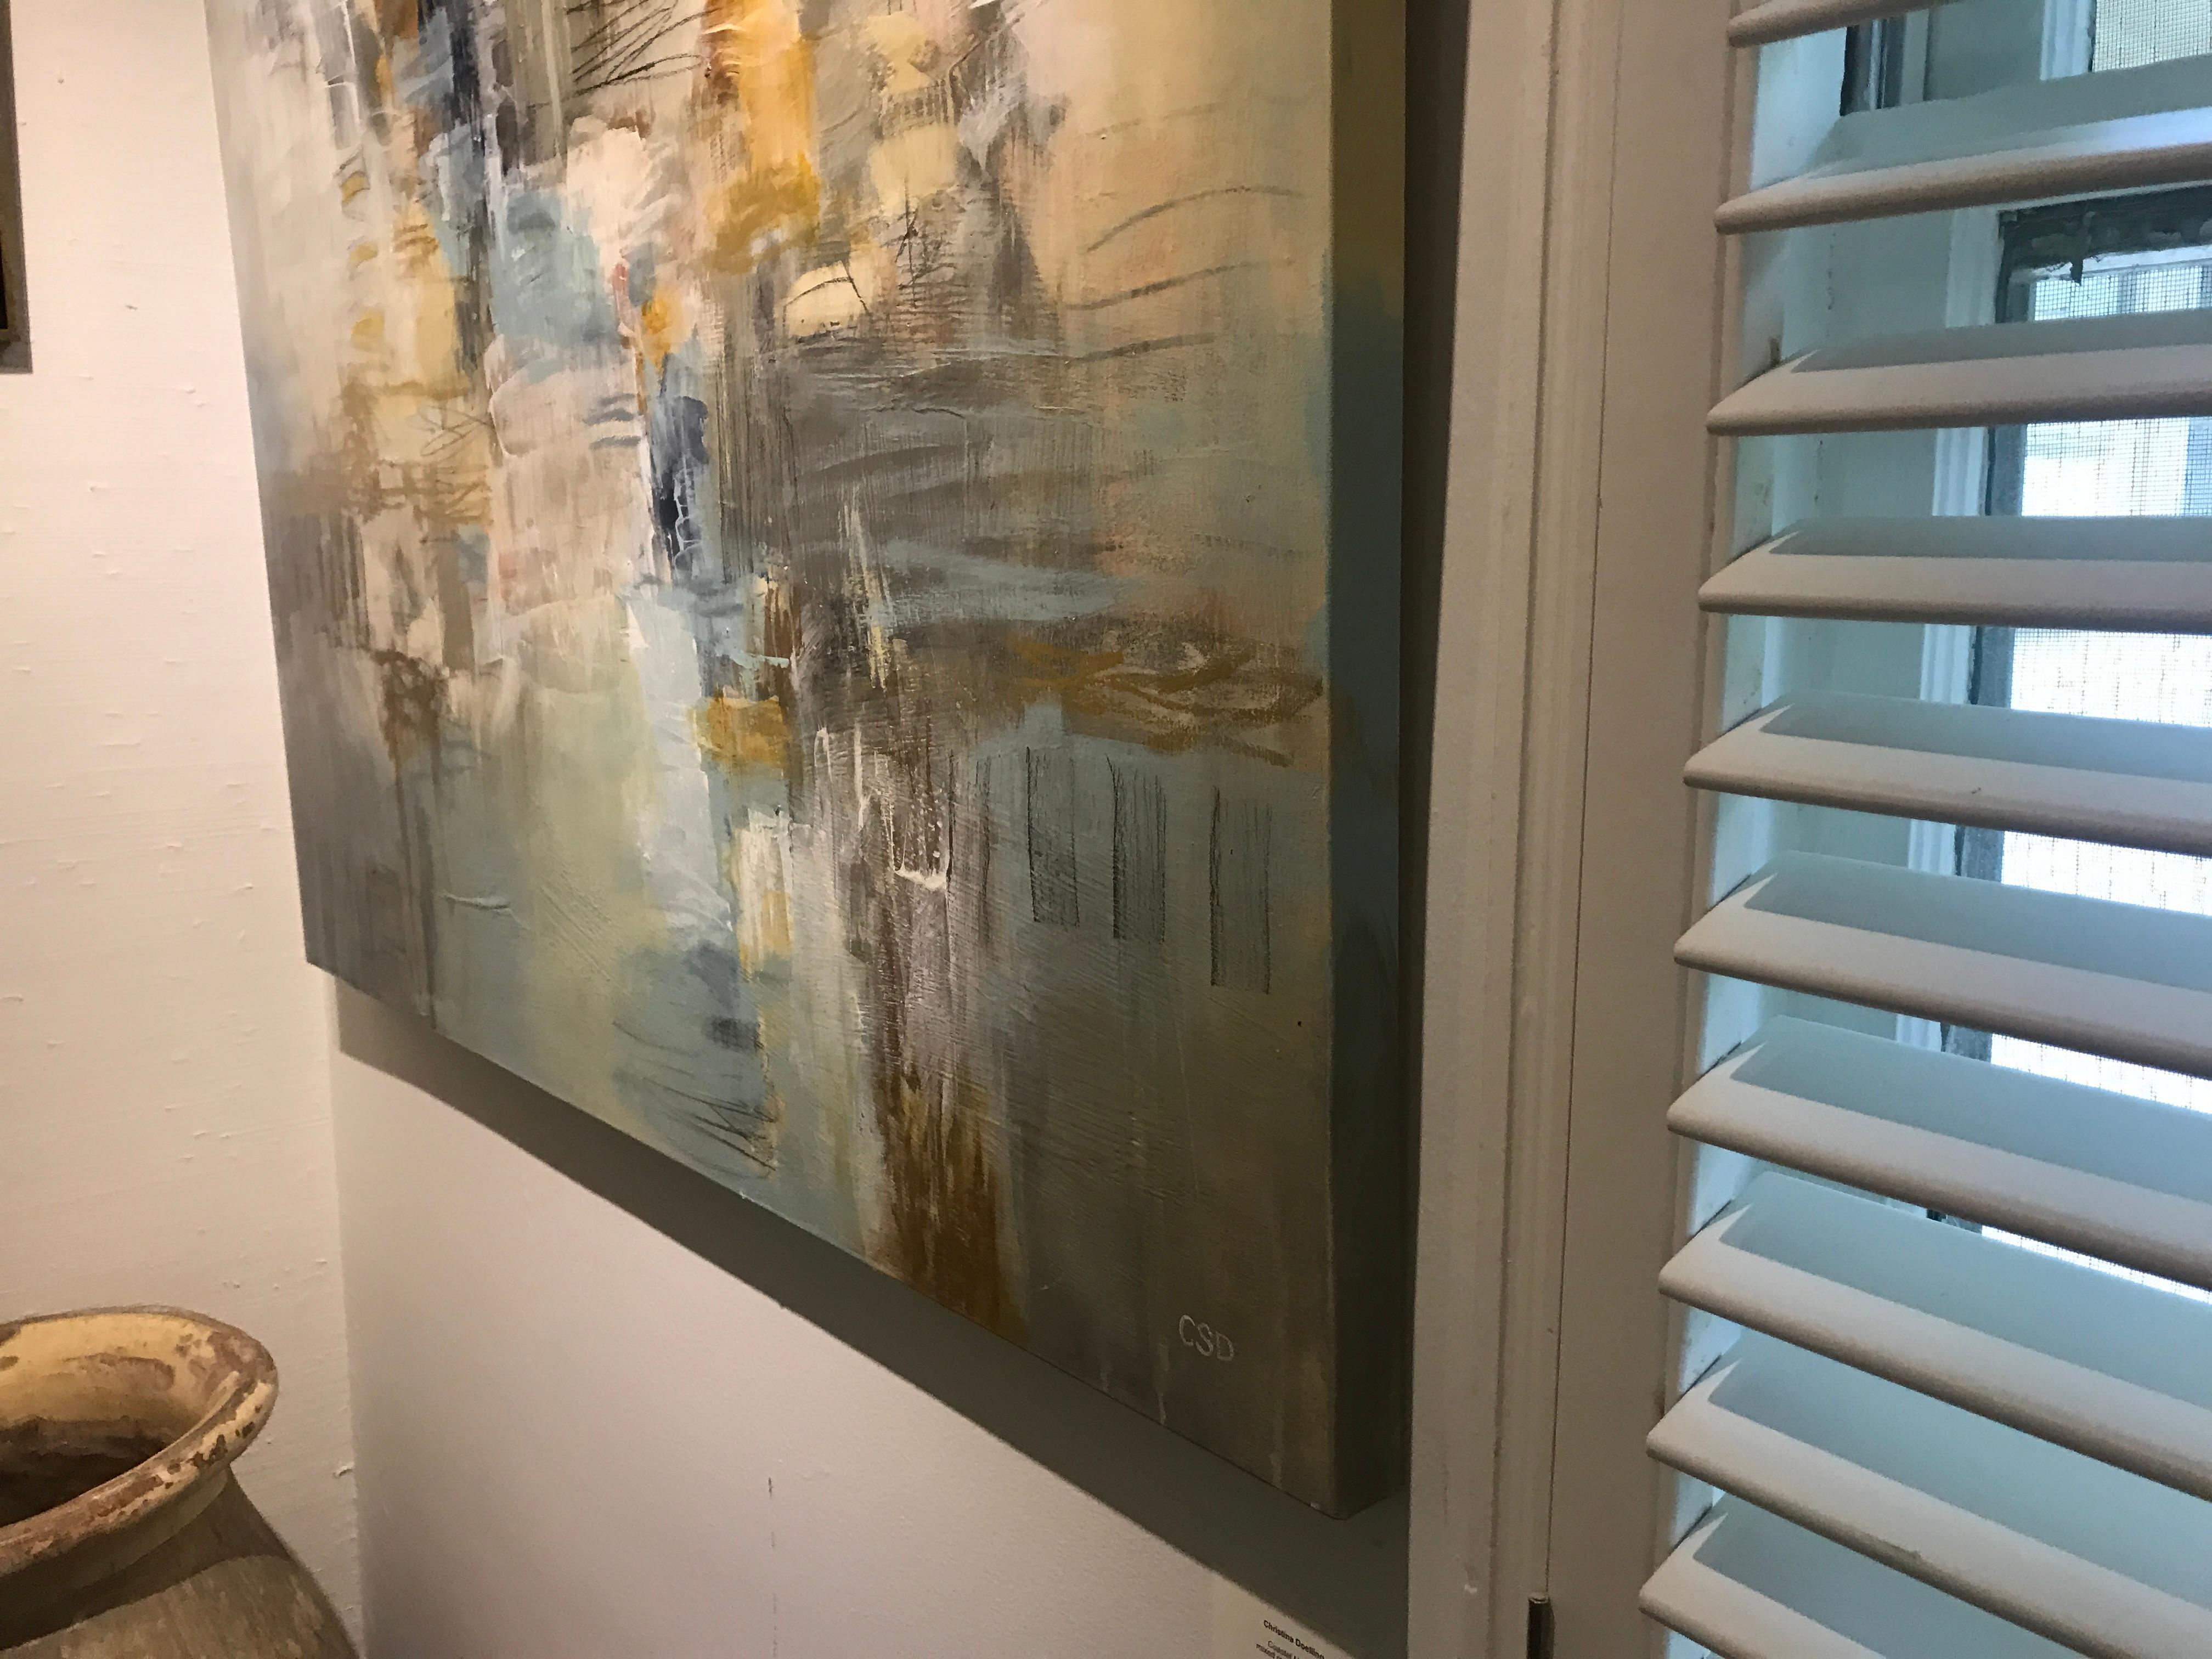 Coastal Morning, Christina Doelling 2018 Abstract Mixed Media on Canvas Painting 5